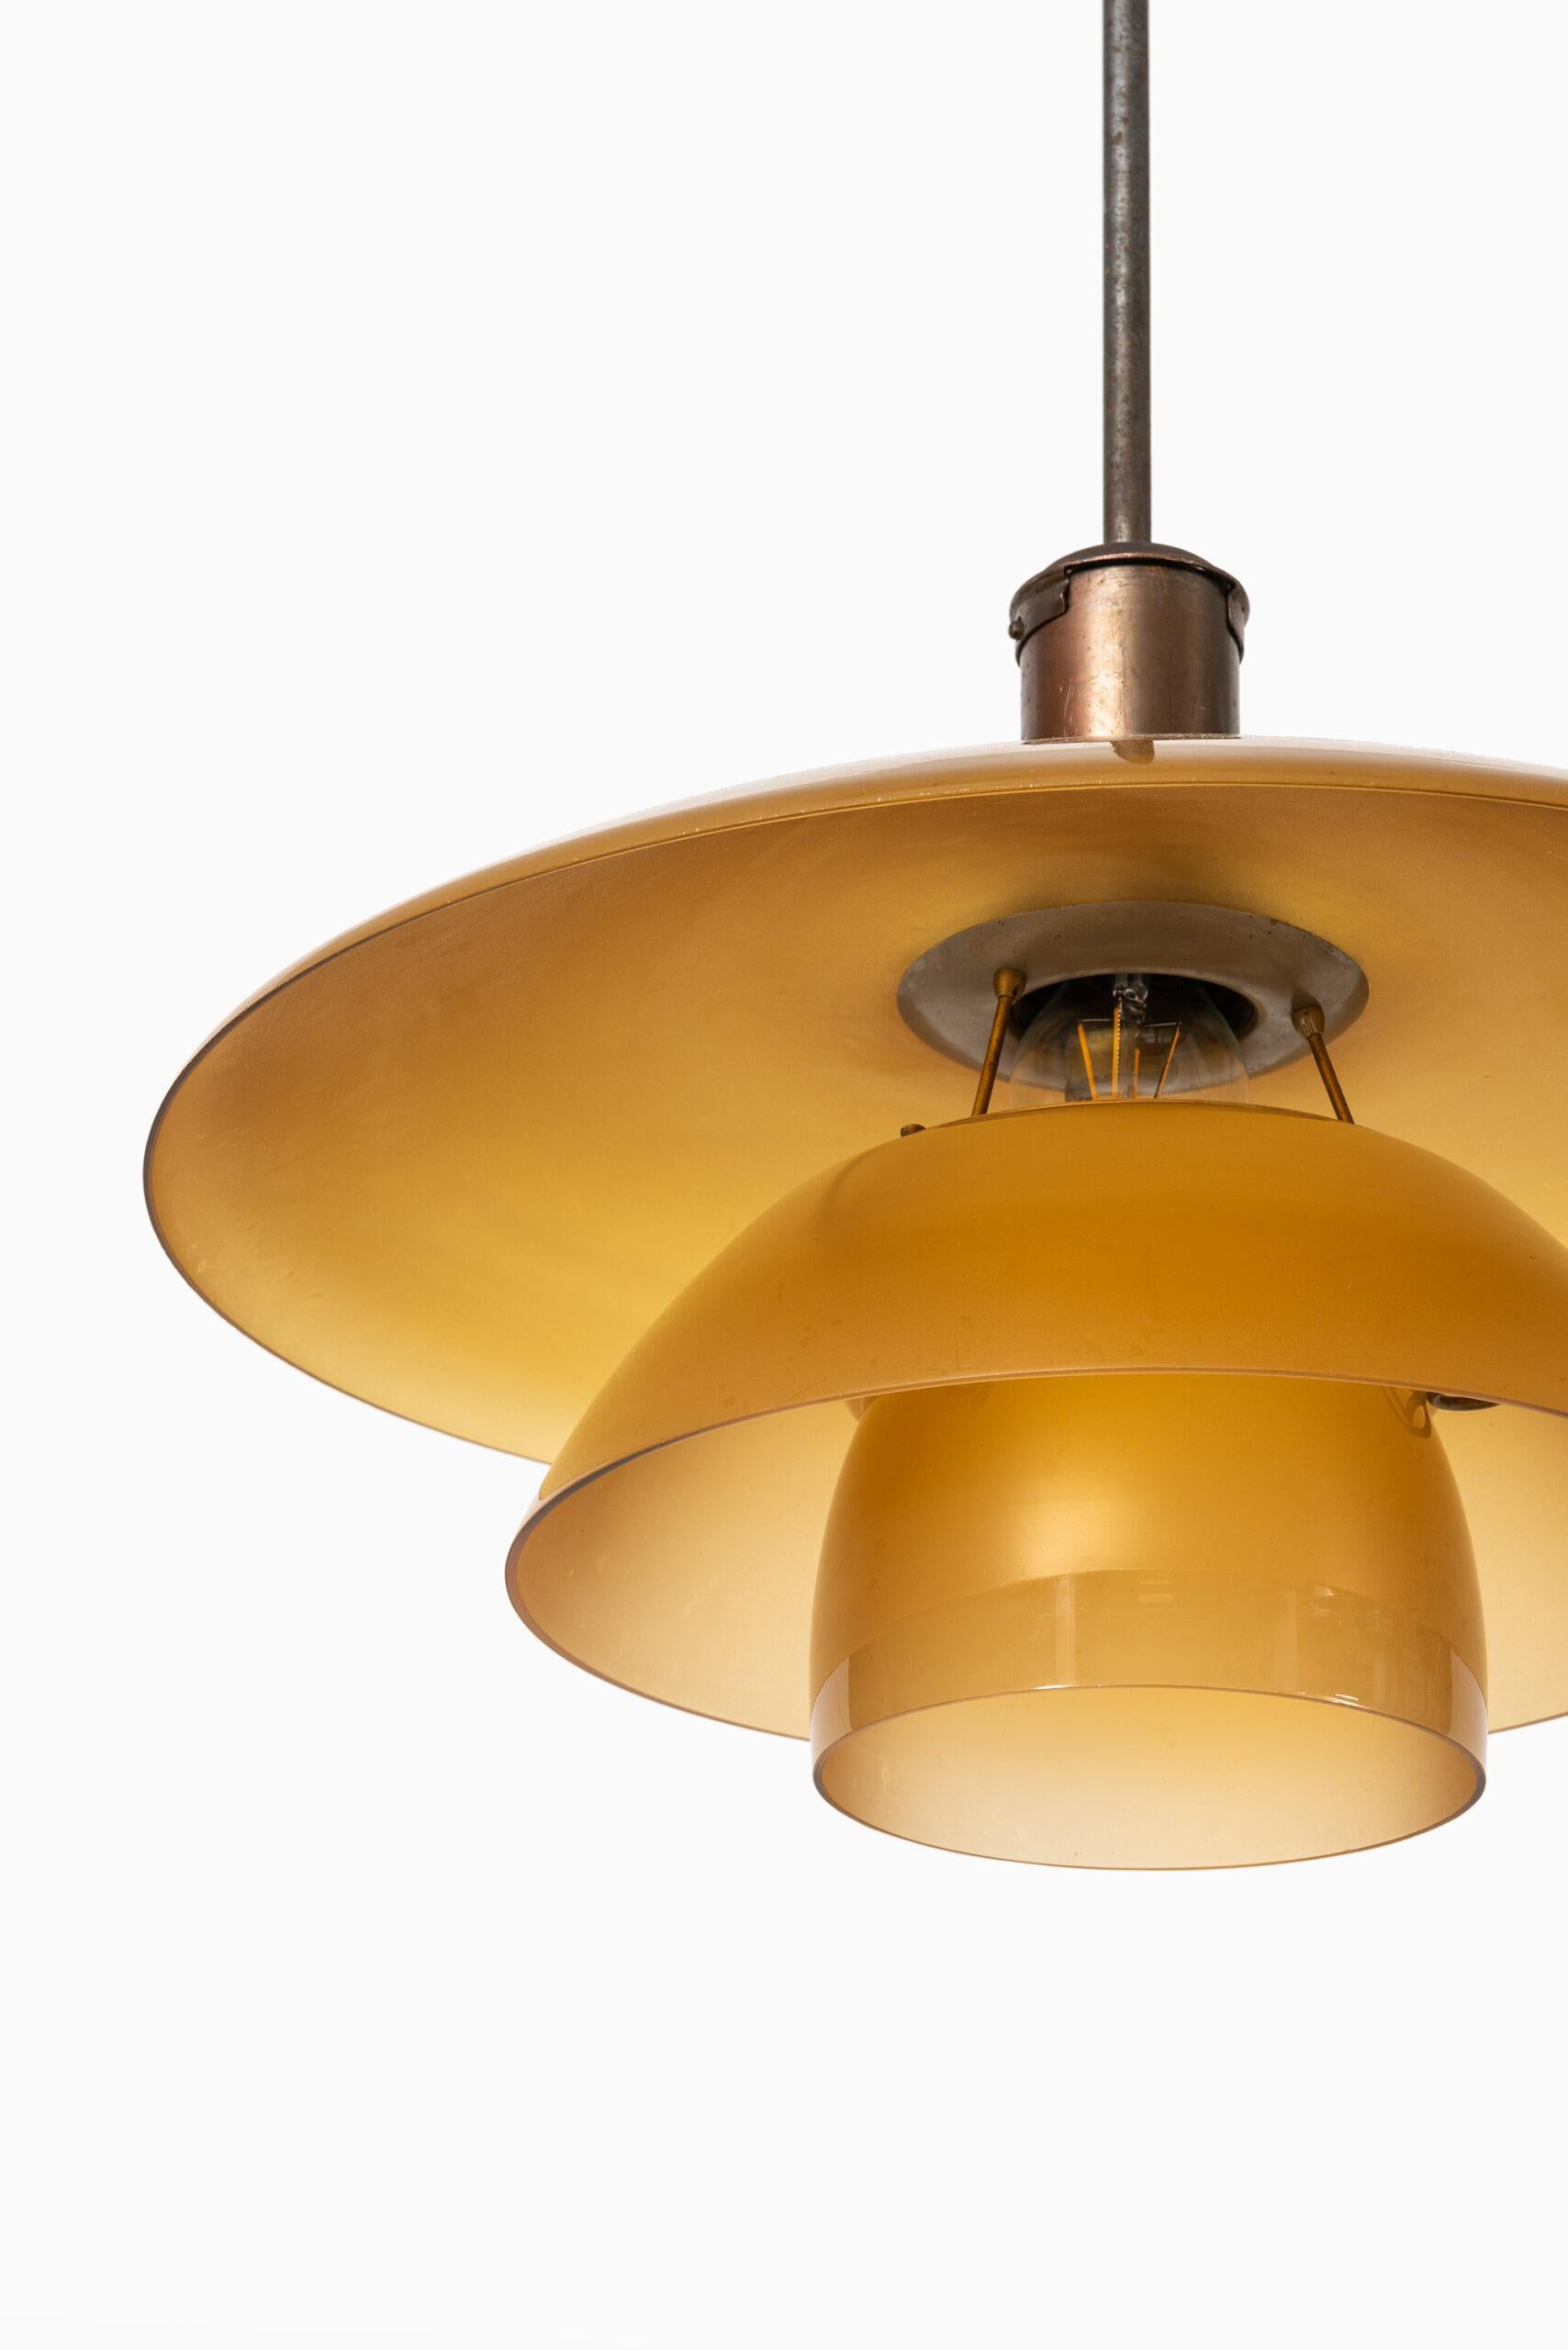 Scandinavian Modern Poul Henningsen Ceiling Lamp PH-5/5 Produced by Louis Poulsen in Denmark